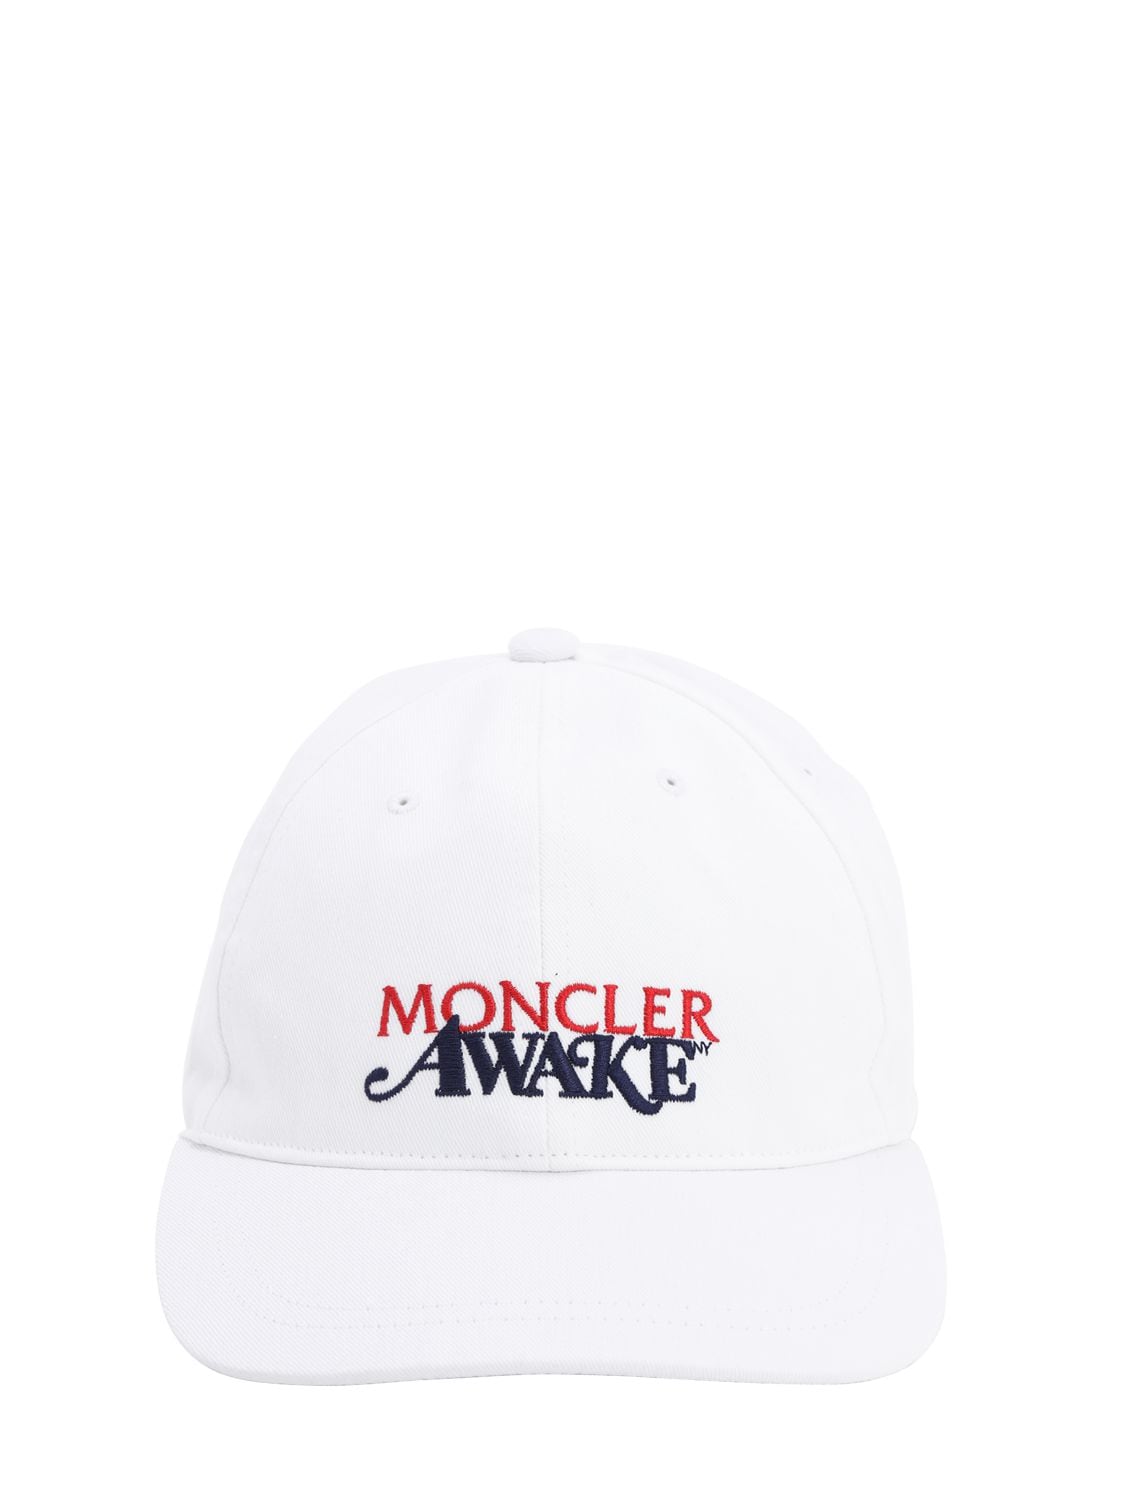 MONCLER GENIUS AWAKE NYC COTTON LOGO CAP,71I3GK012-MDAX0